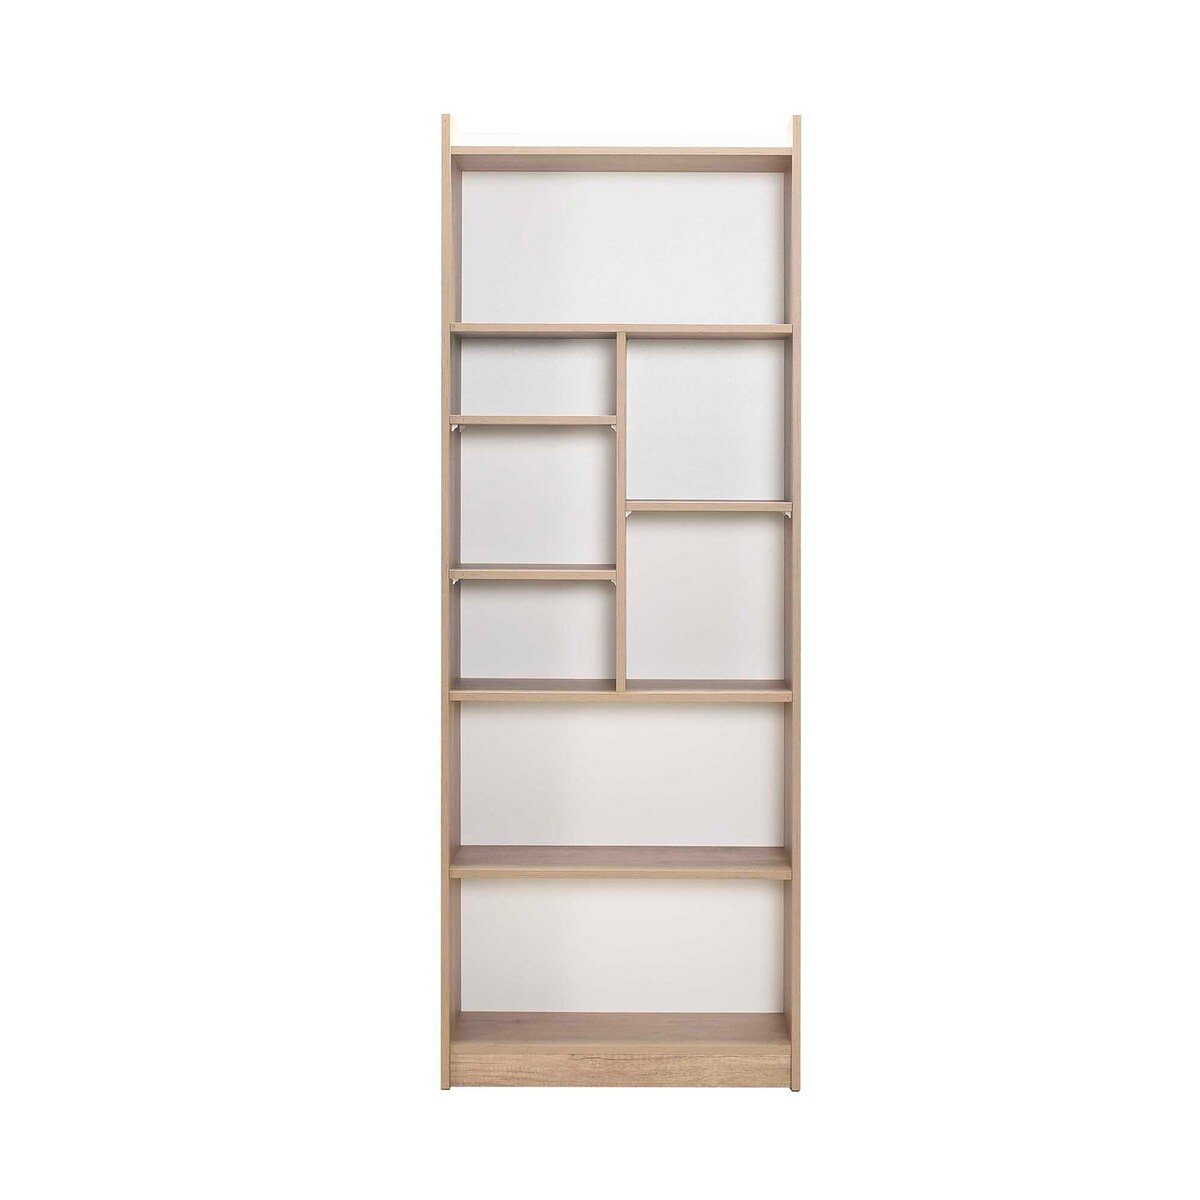 Maple Leaf Book Shelf Storage Organizer 183c661-TT Beech